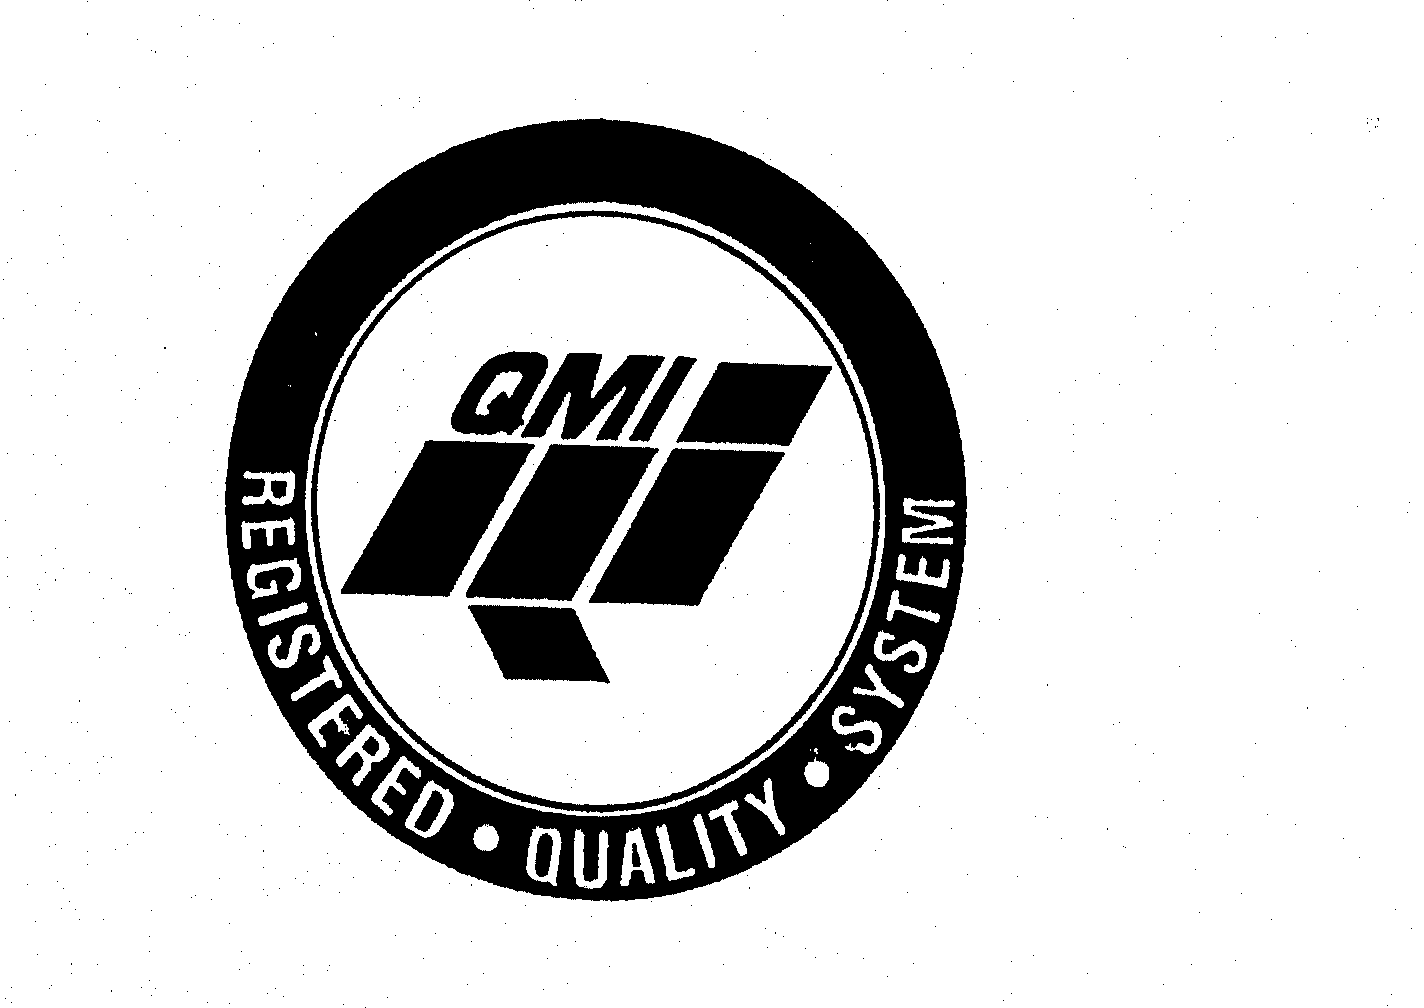  QMI REGISTERED QUALITY SYSTEM